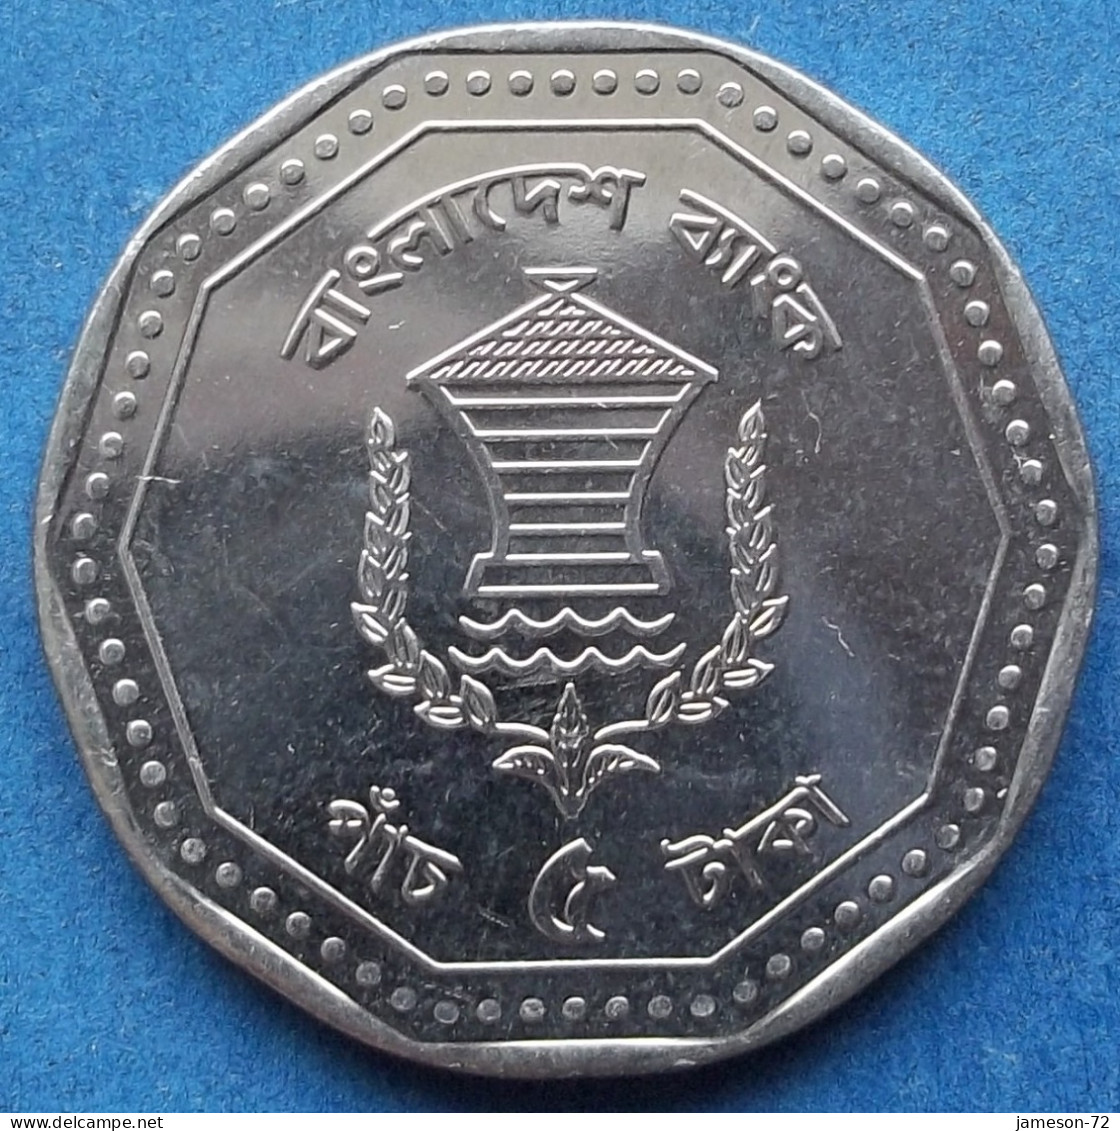 BANGLADESH - 5 Taka 2012 "Bangladesh Bank Logo" KM# 33 Independent Peoples Republic (1971) - Edelweiss Coins - Bangladesh